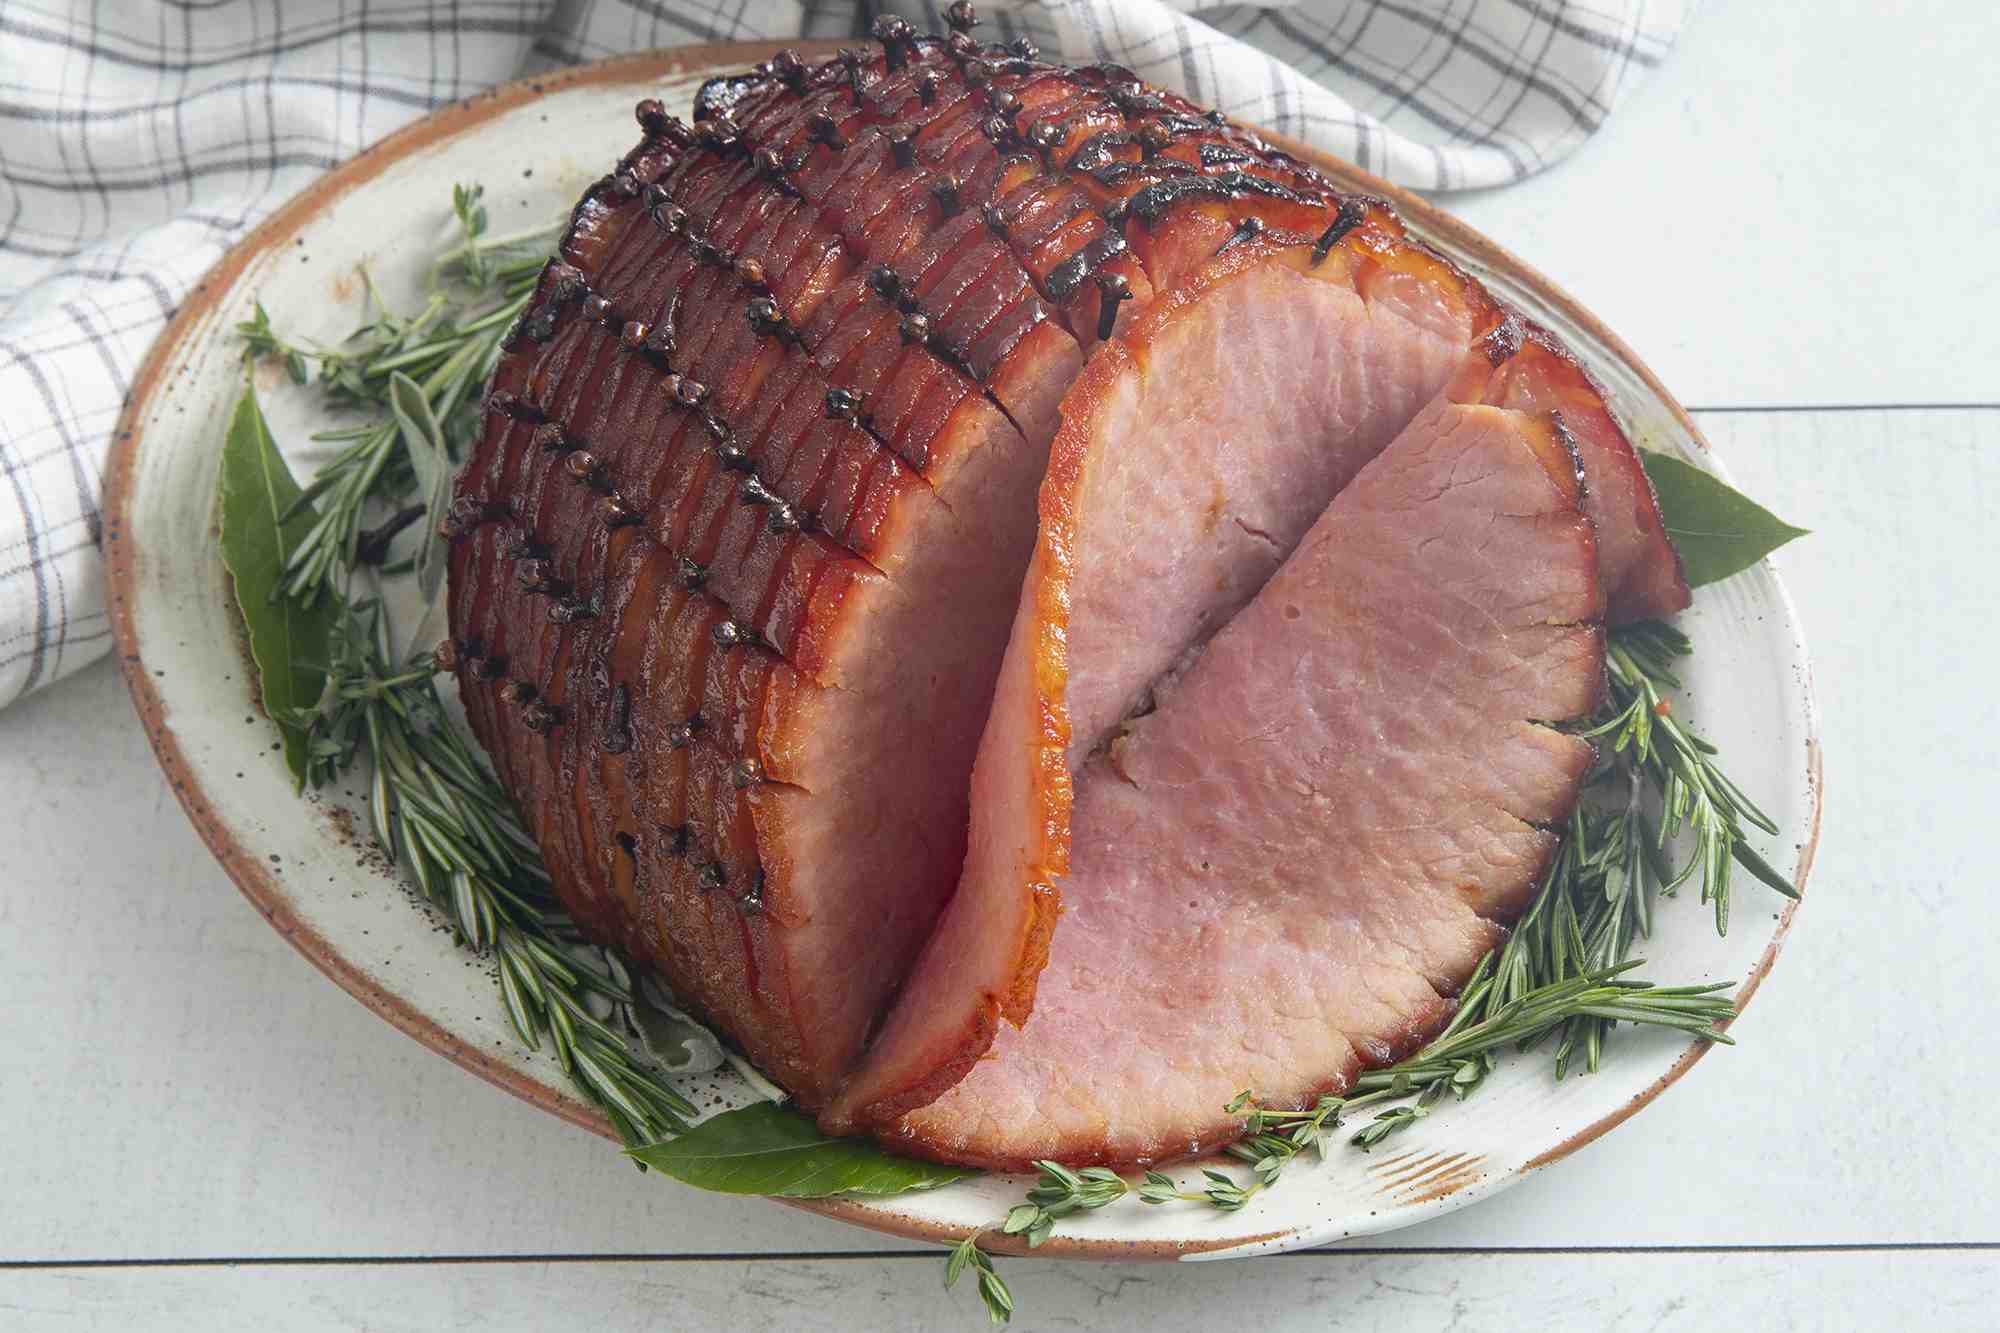 Is turkey ham the same as turkey bacon?